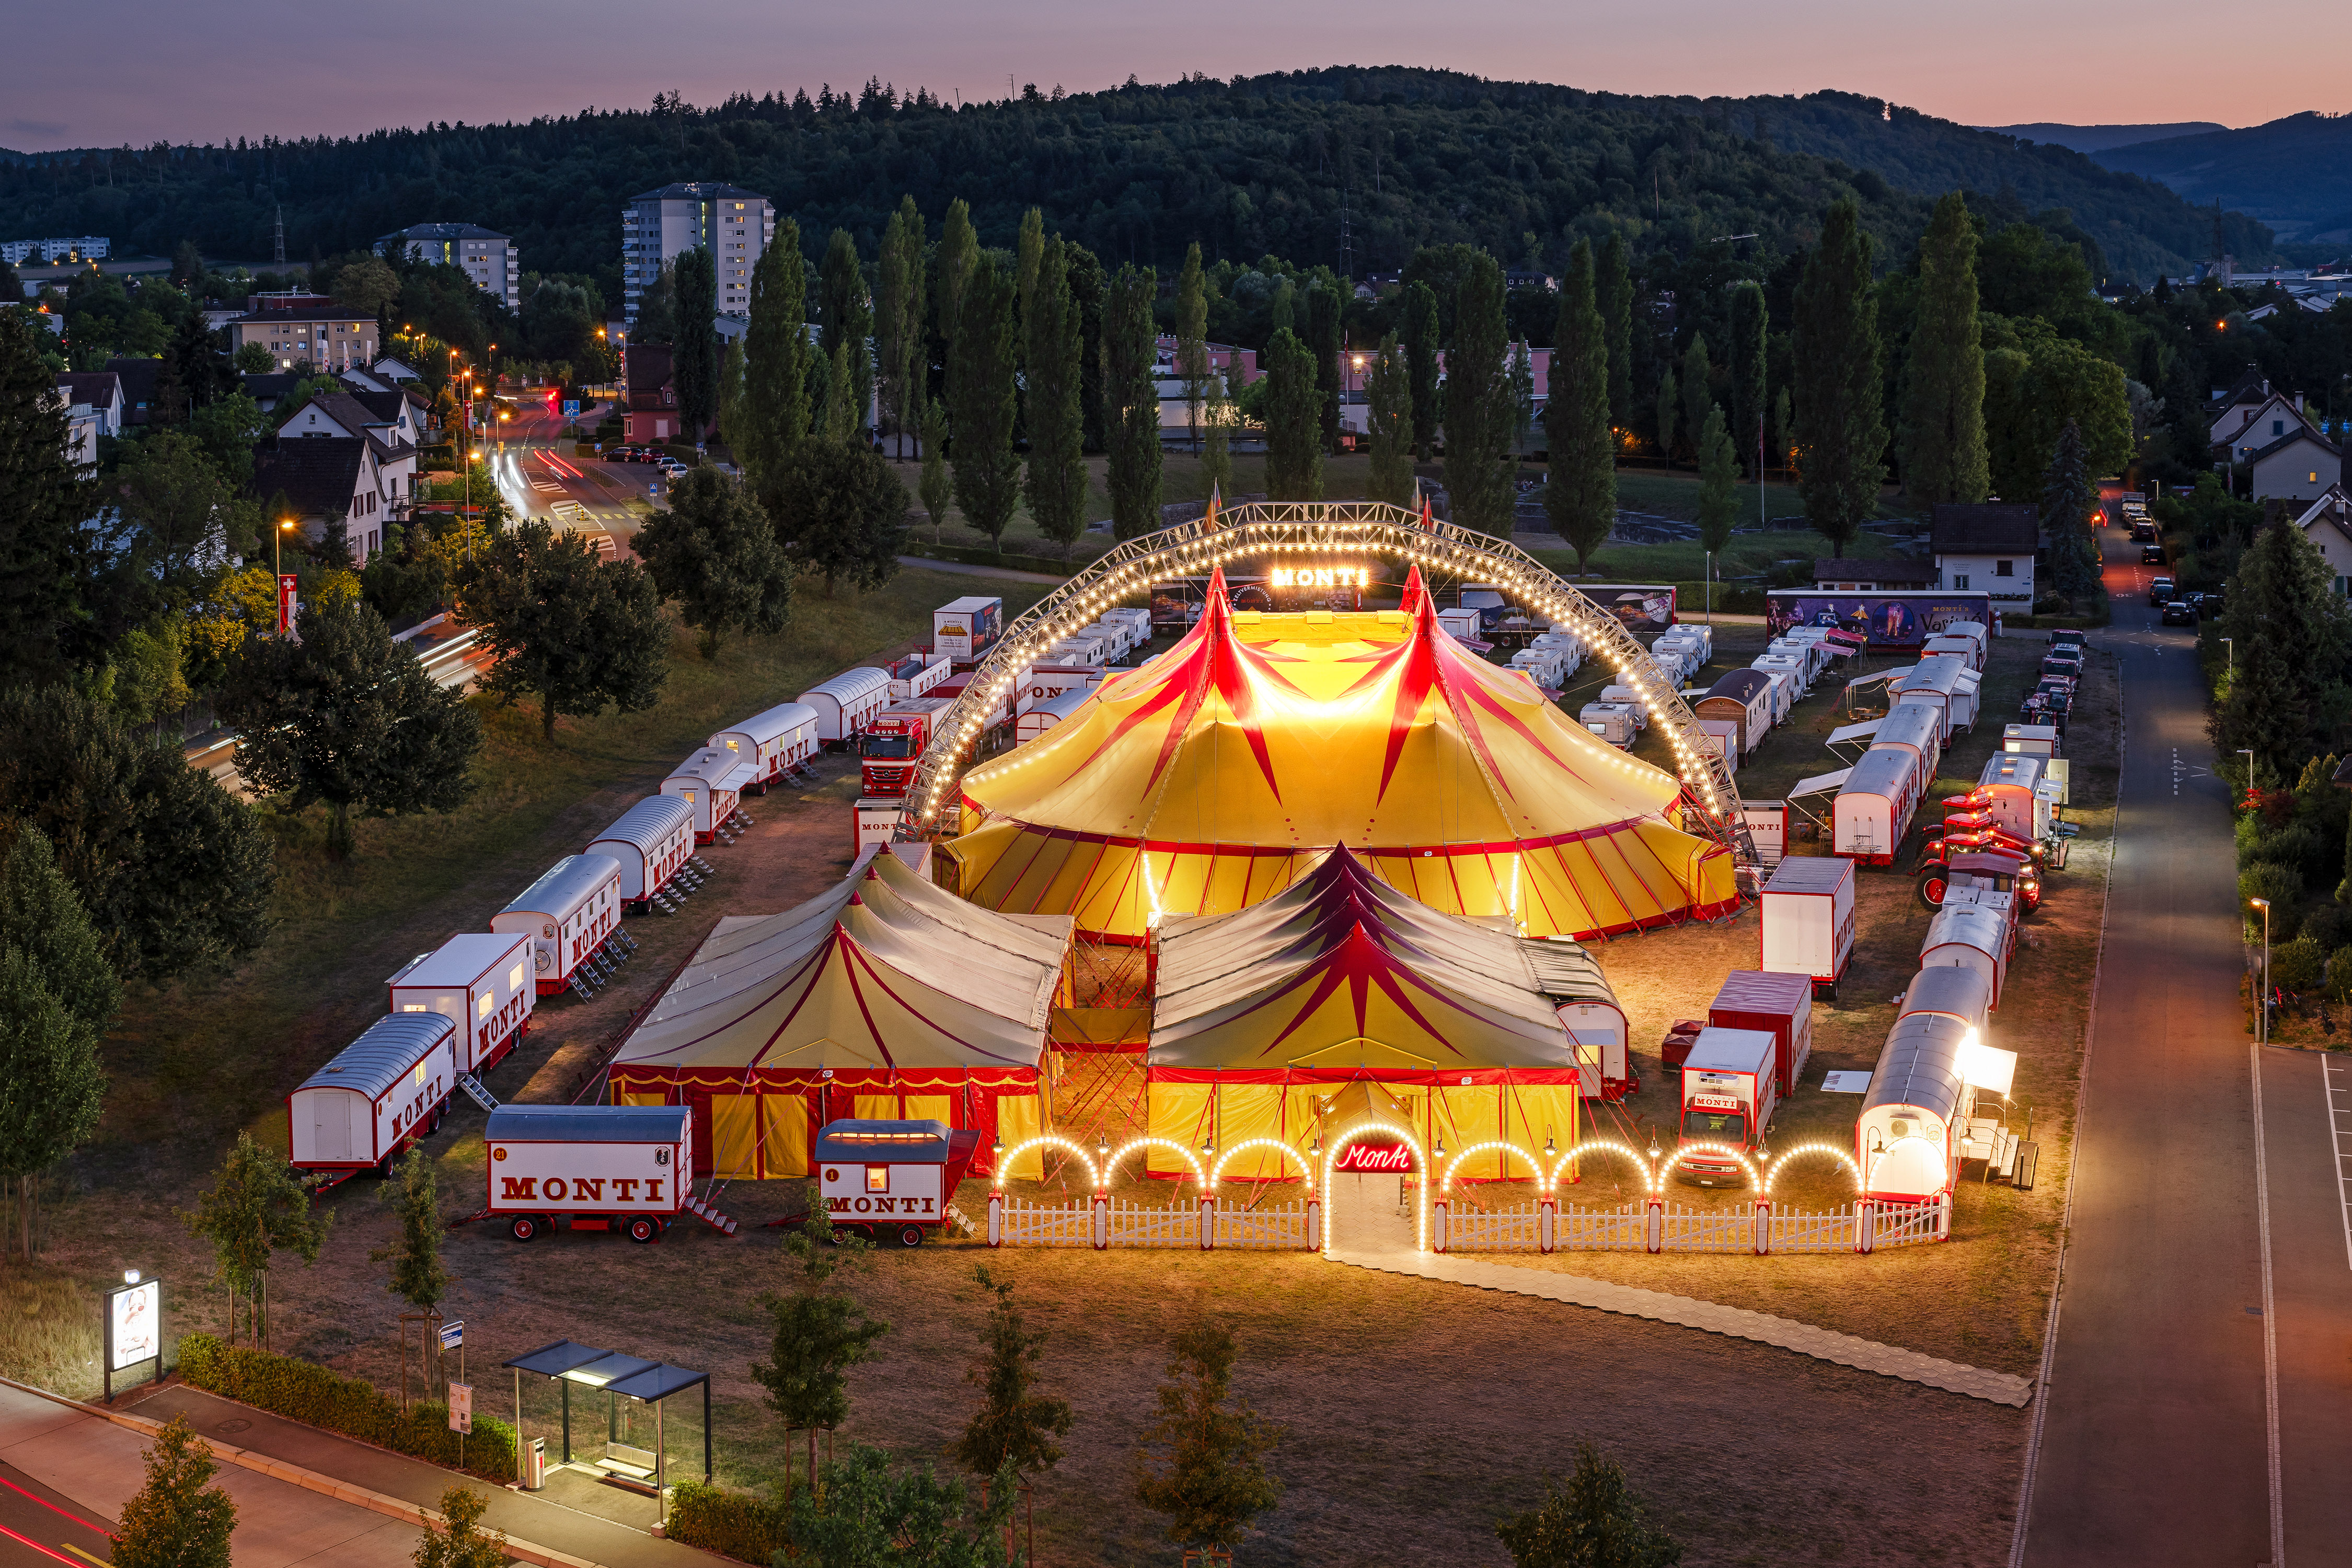 Circus Monti in Windisch